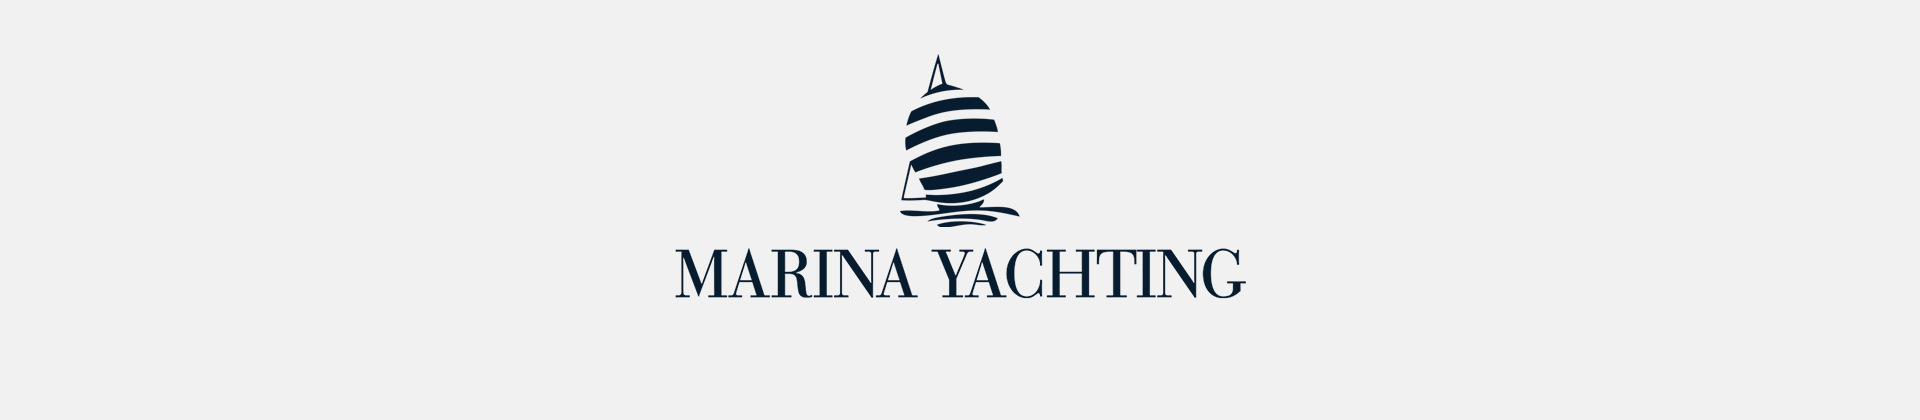 Marina Yachting scarpe online donna